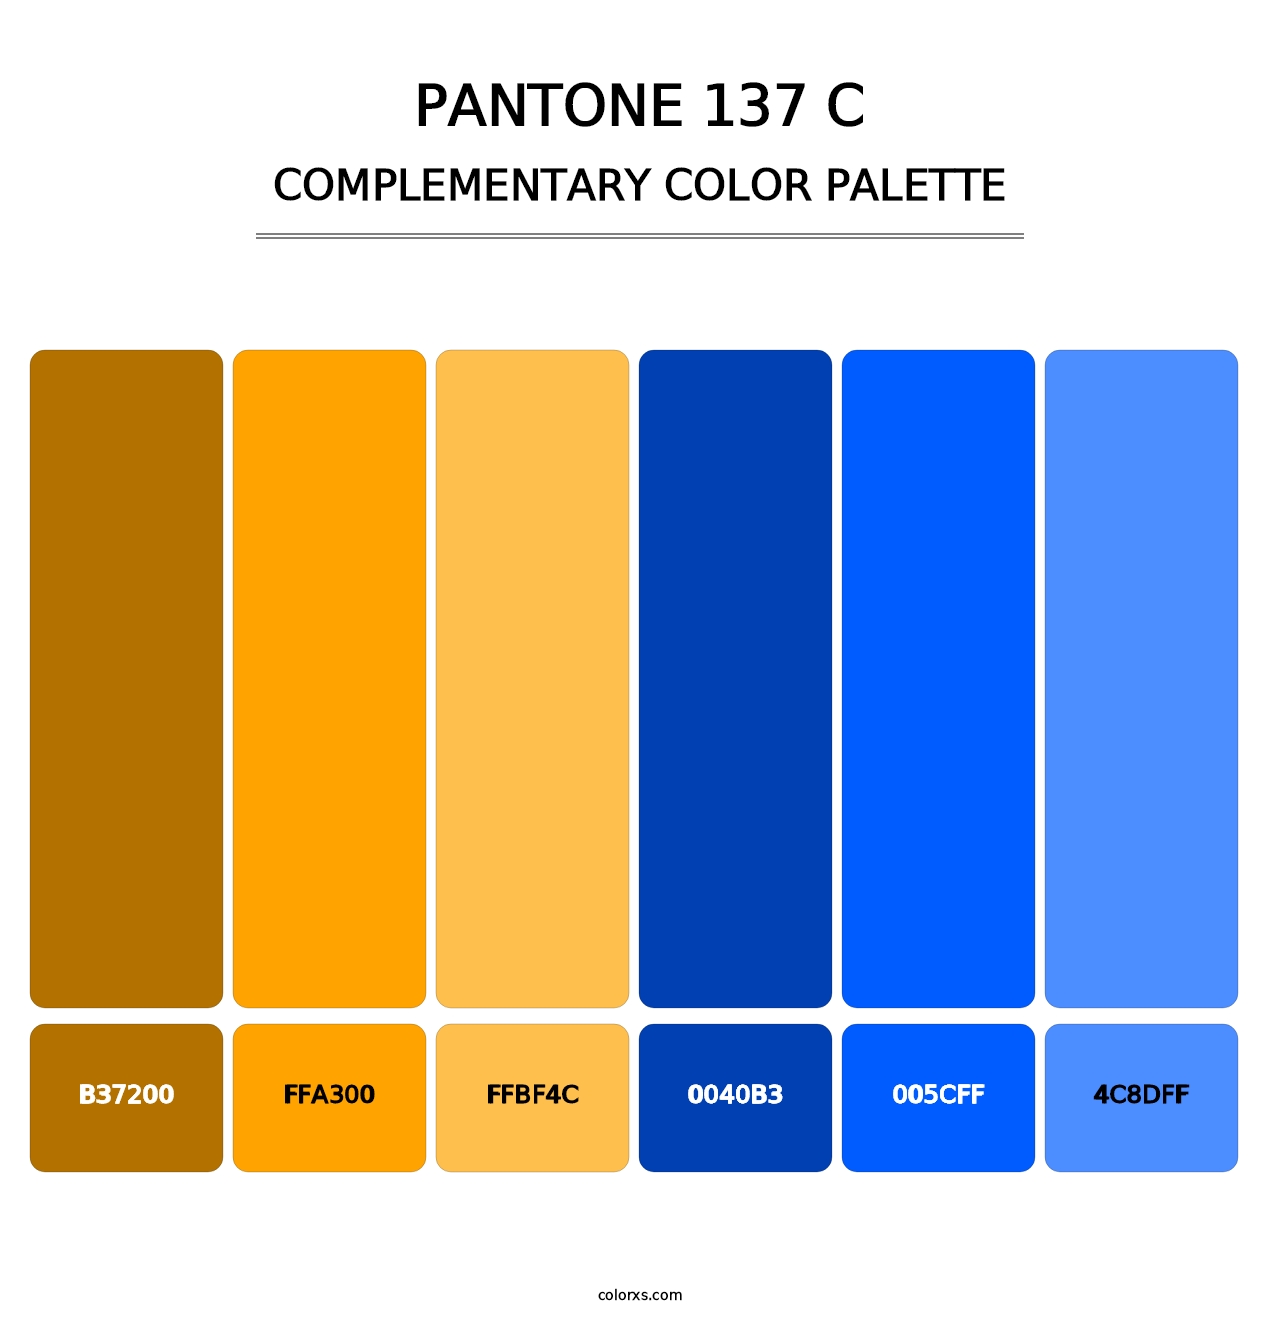 PANTONE 137 C - Complementary Color Palette